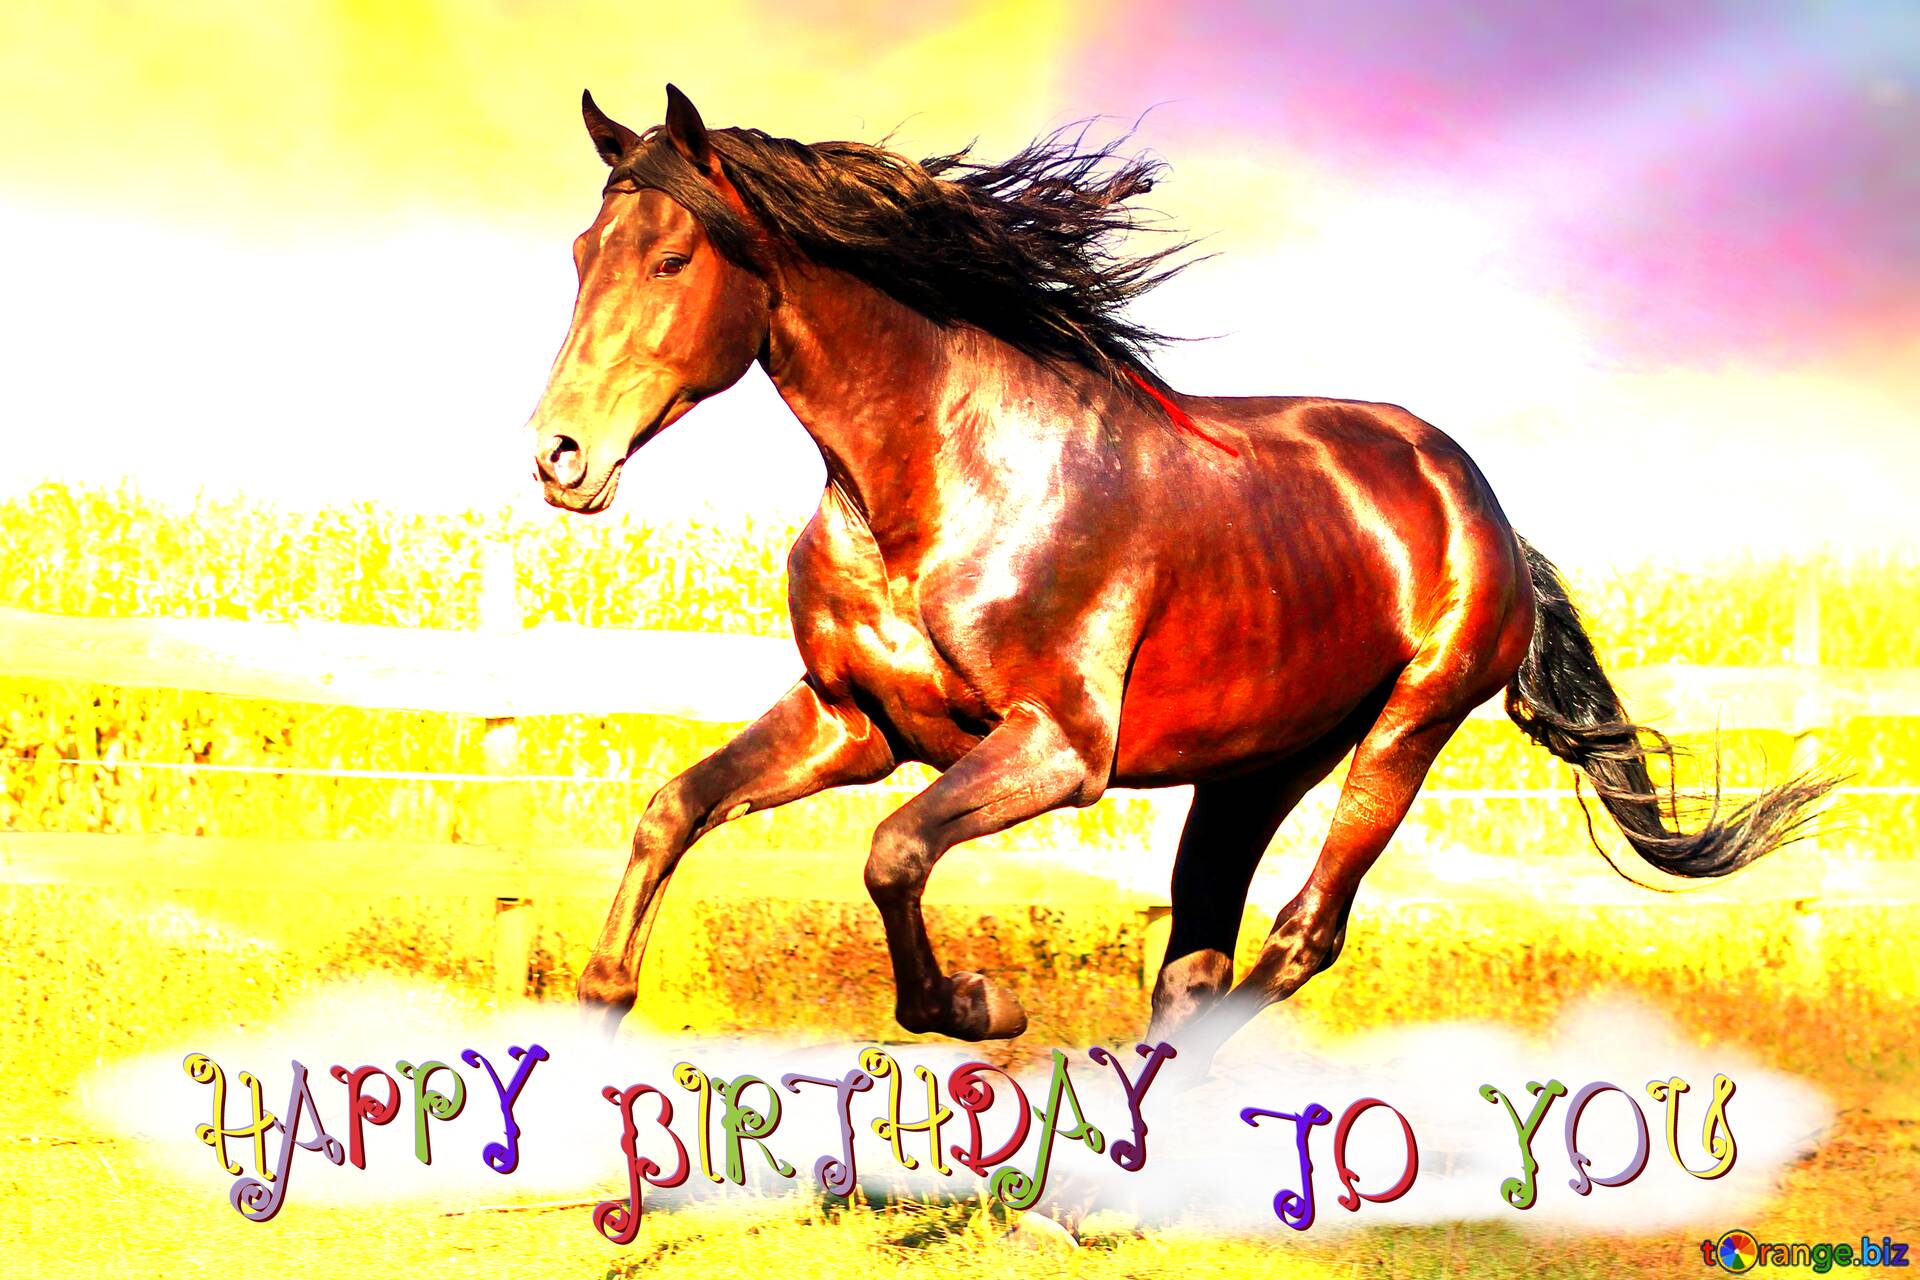 birthday-card-happy-birthday-horse-card-bay-horse-birthday-etsy-in